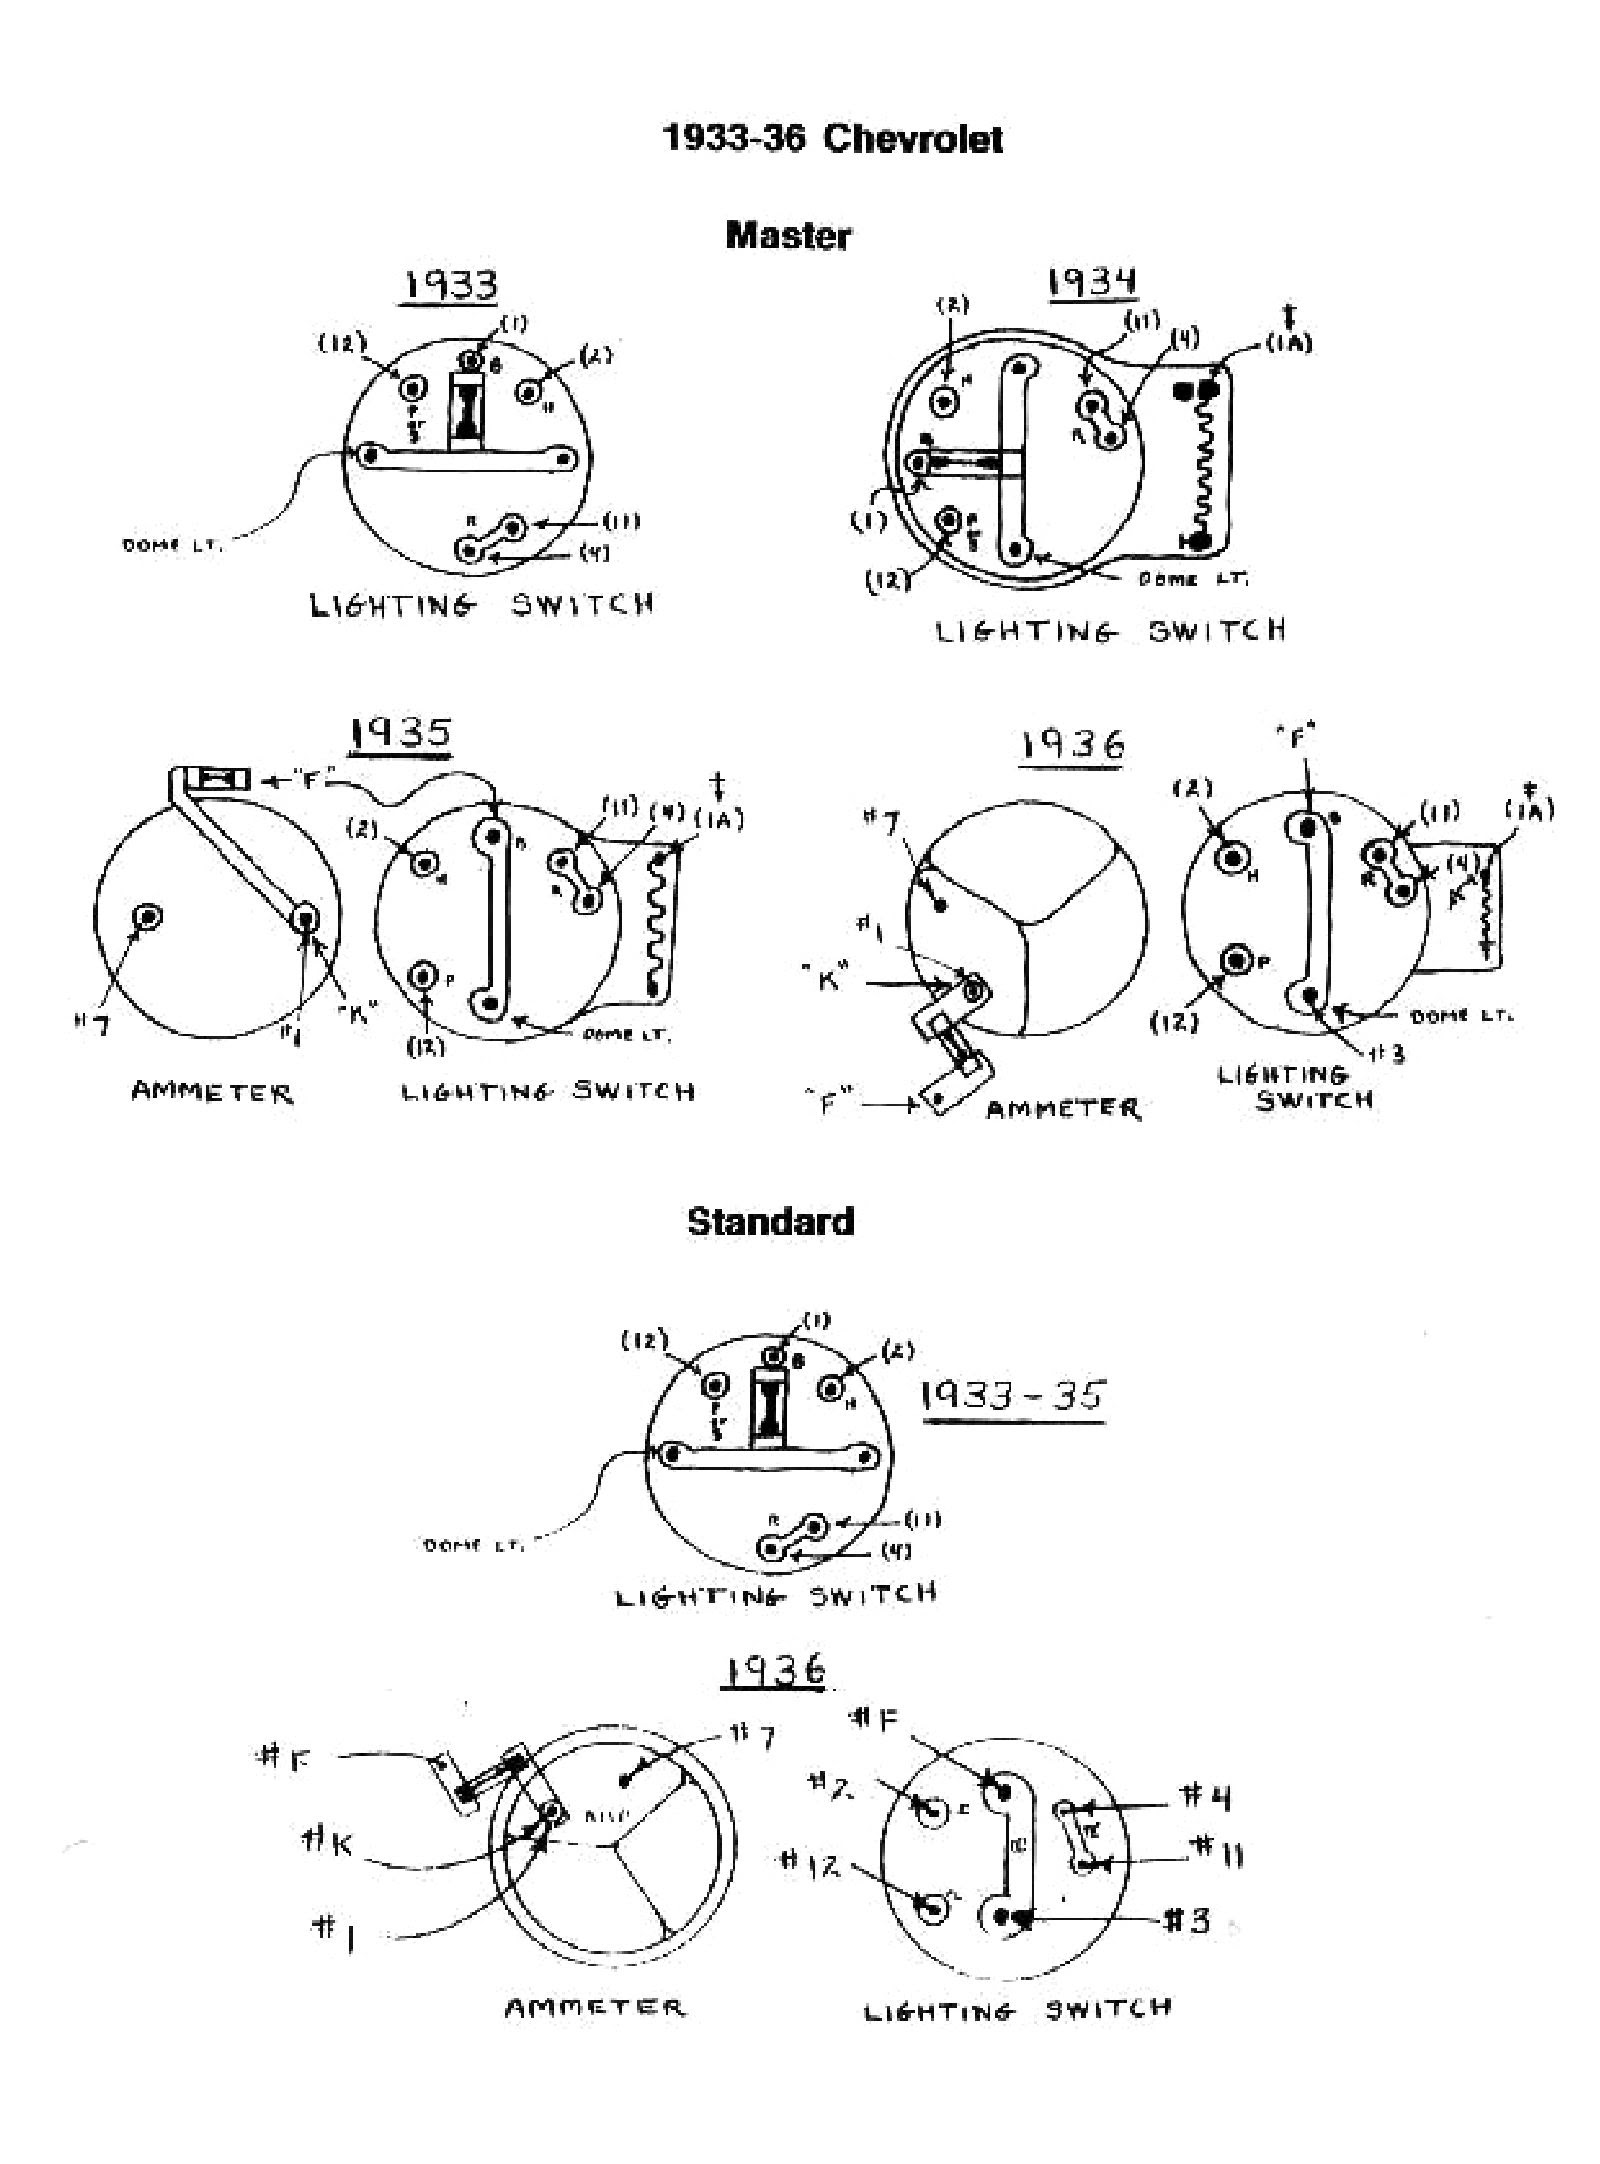 Wiring Manual PDF: 1935 Chevy Wiring Diagram